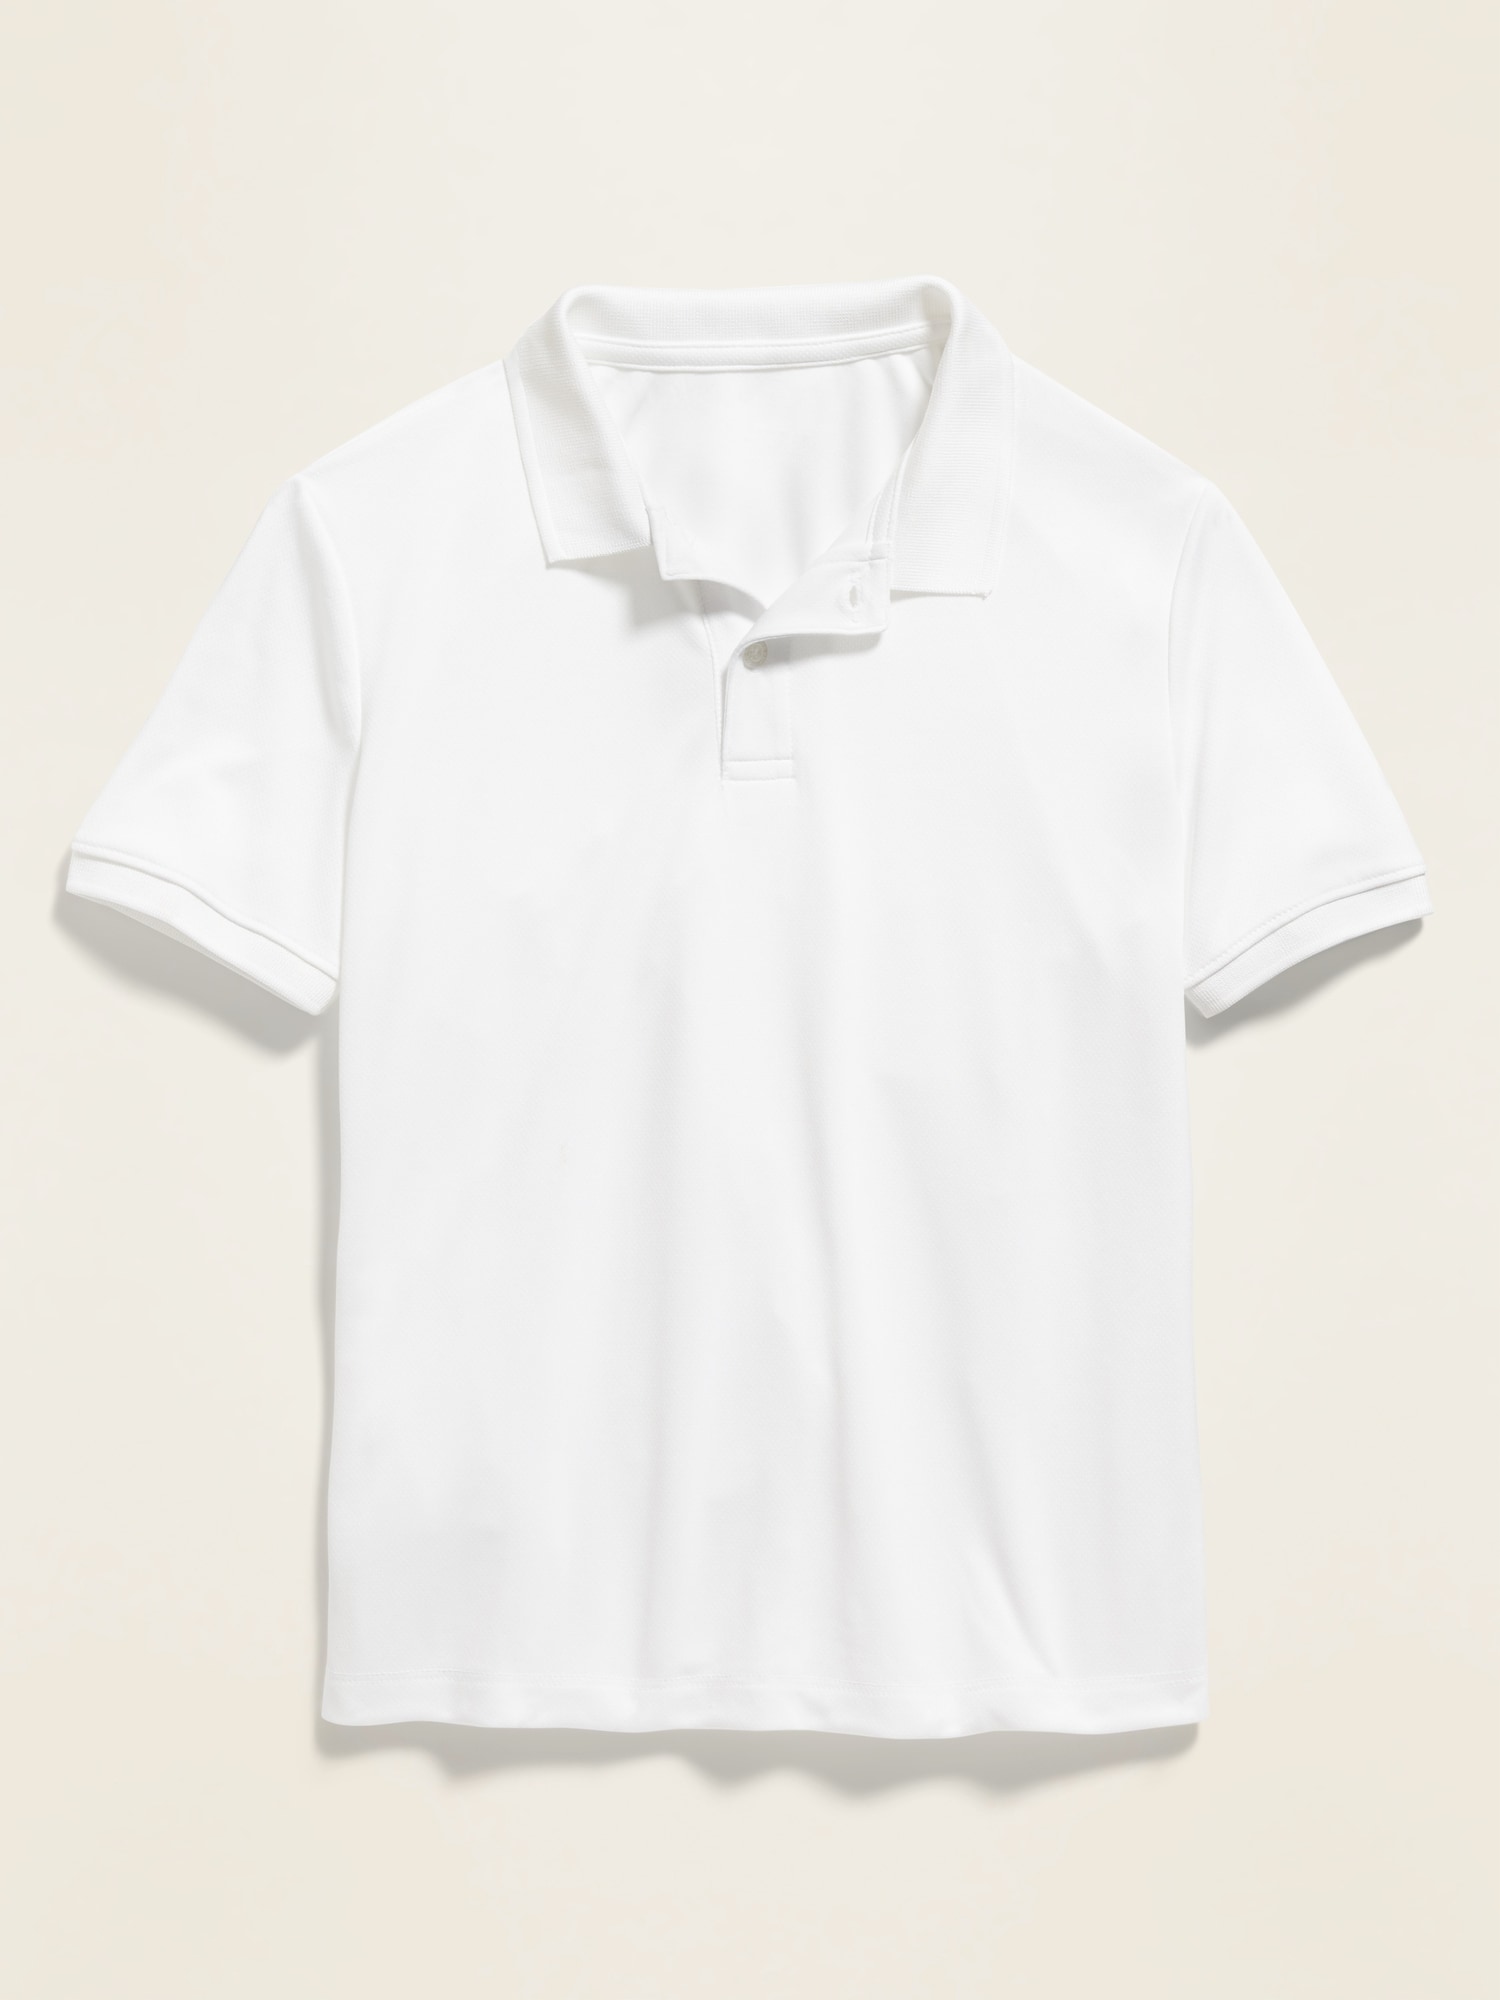 Old Navy Moisture-Wicking School Uniform Polo Shirt for Boys white. 1